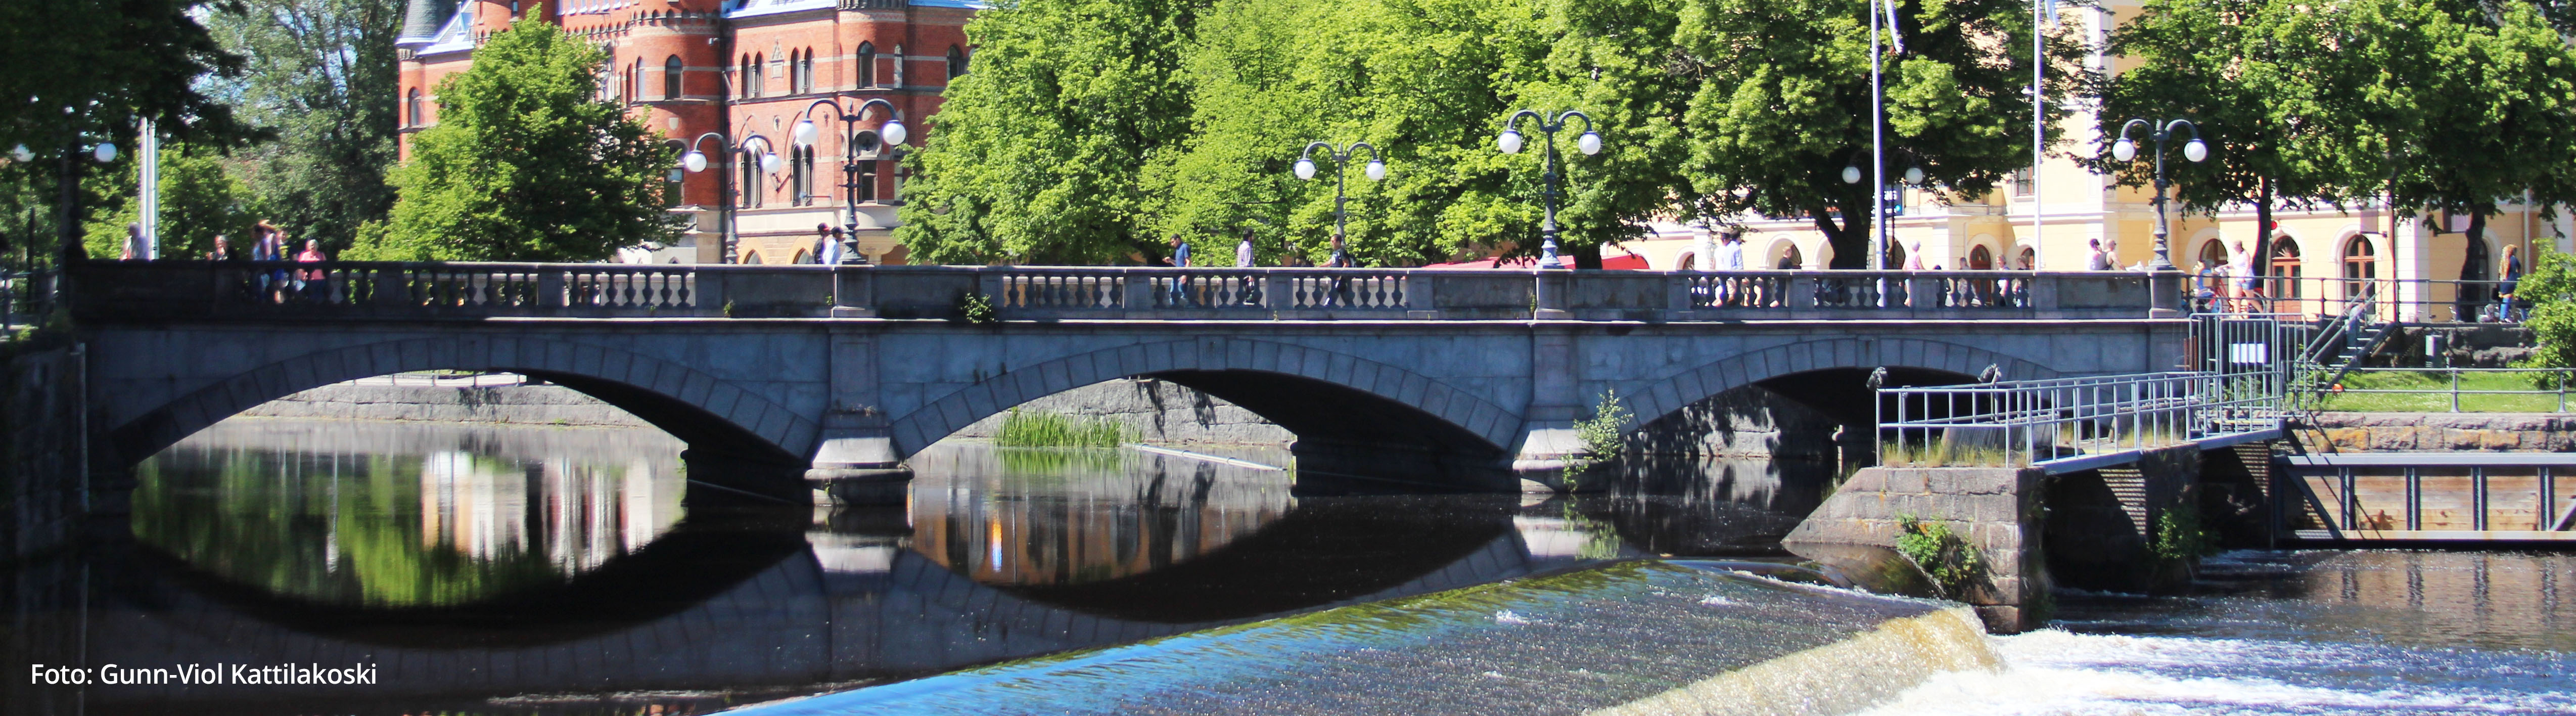 Storbron i Örebro